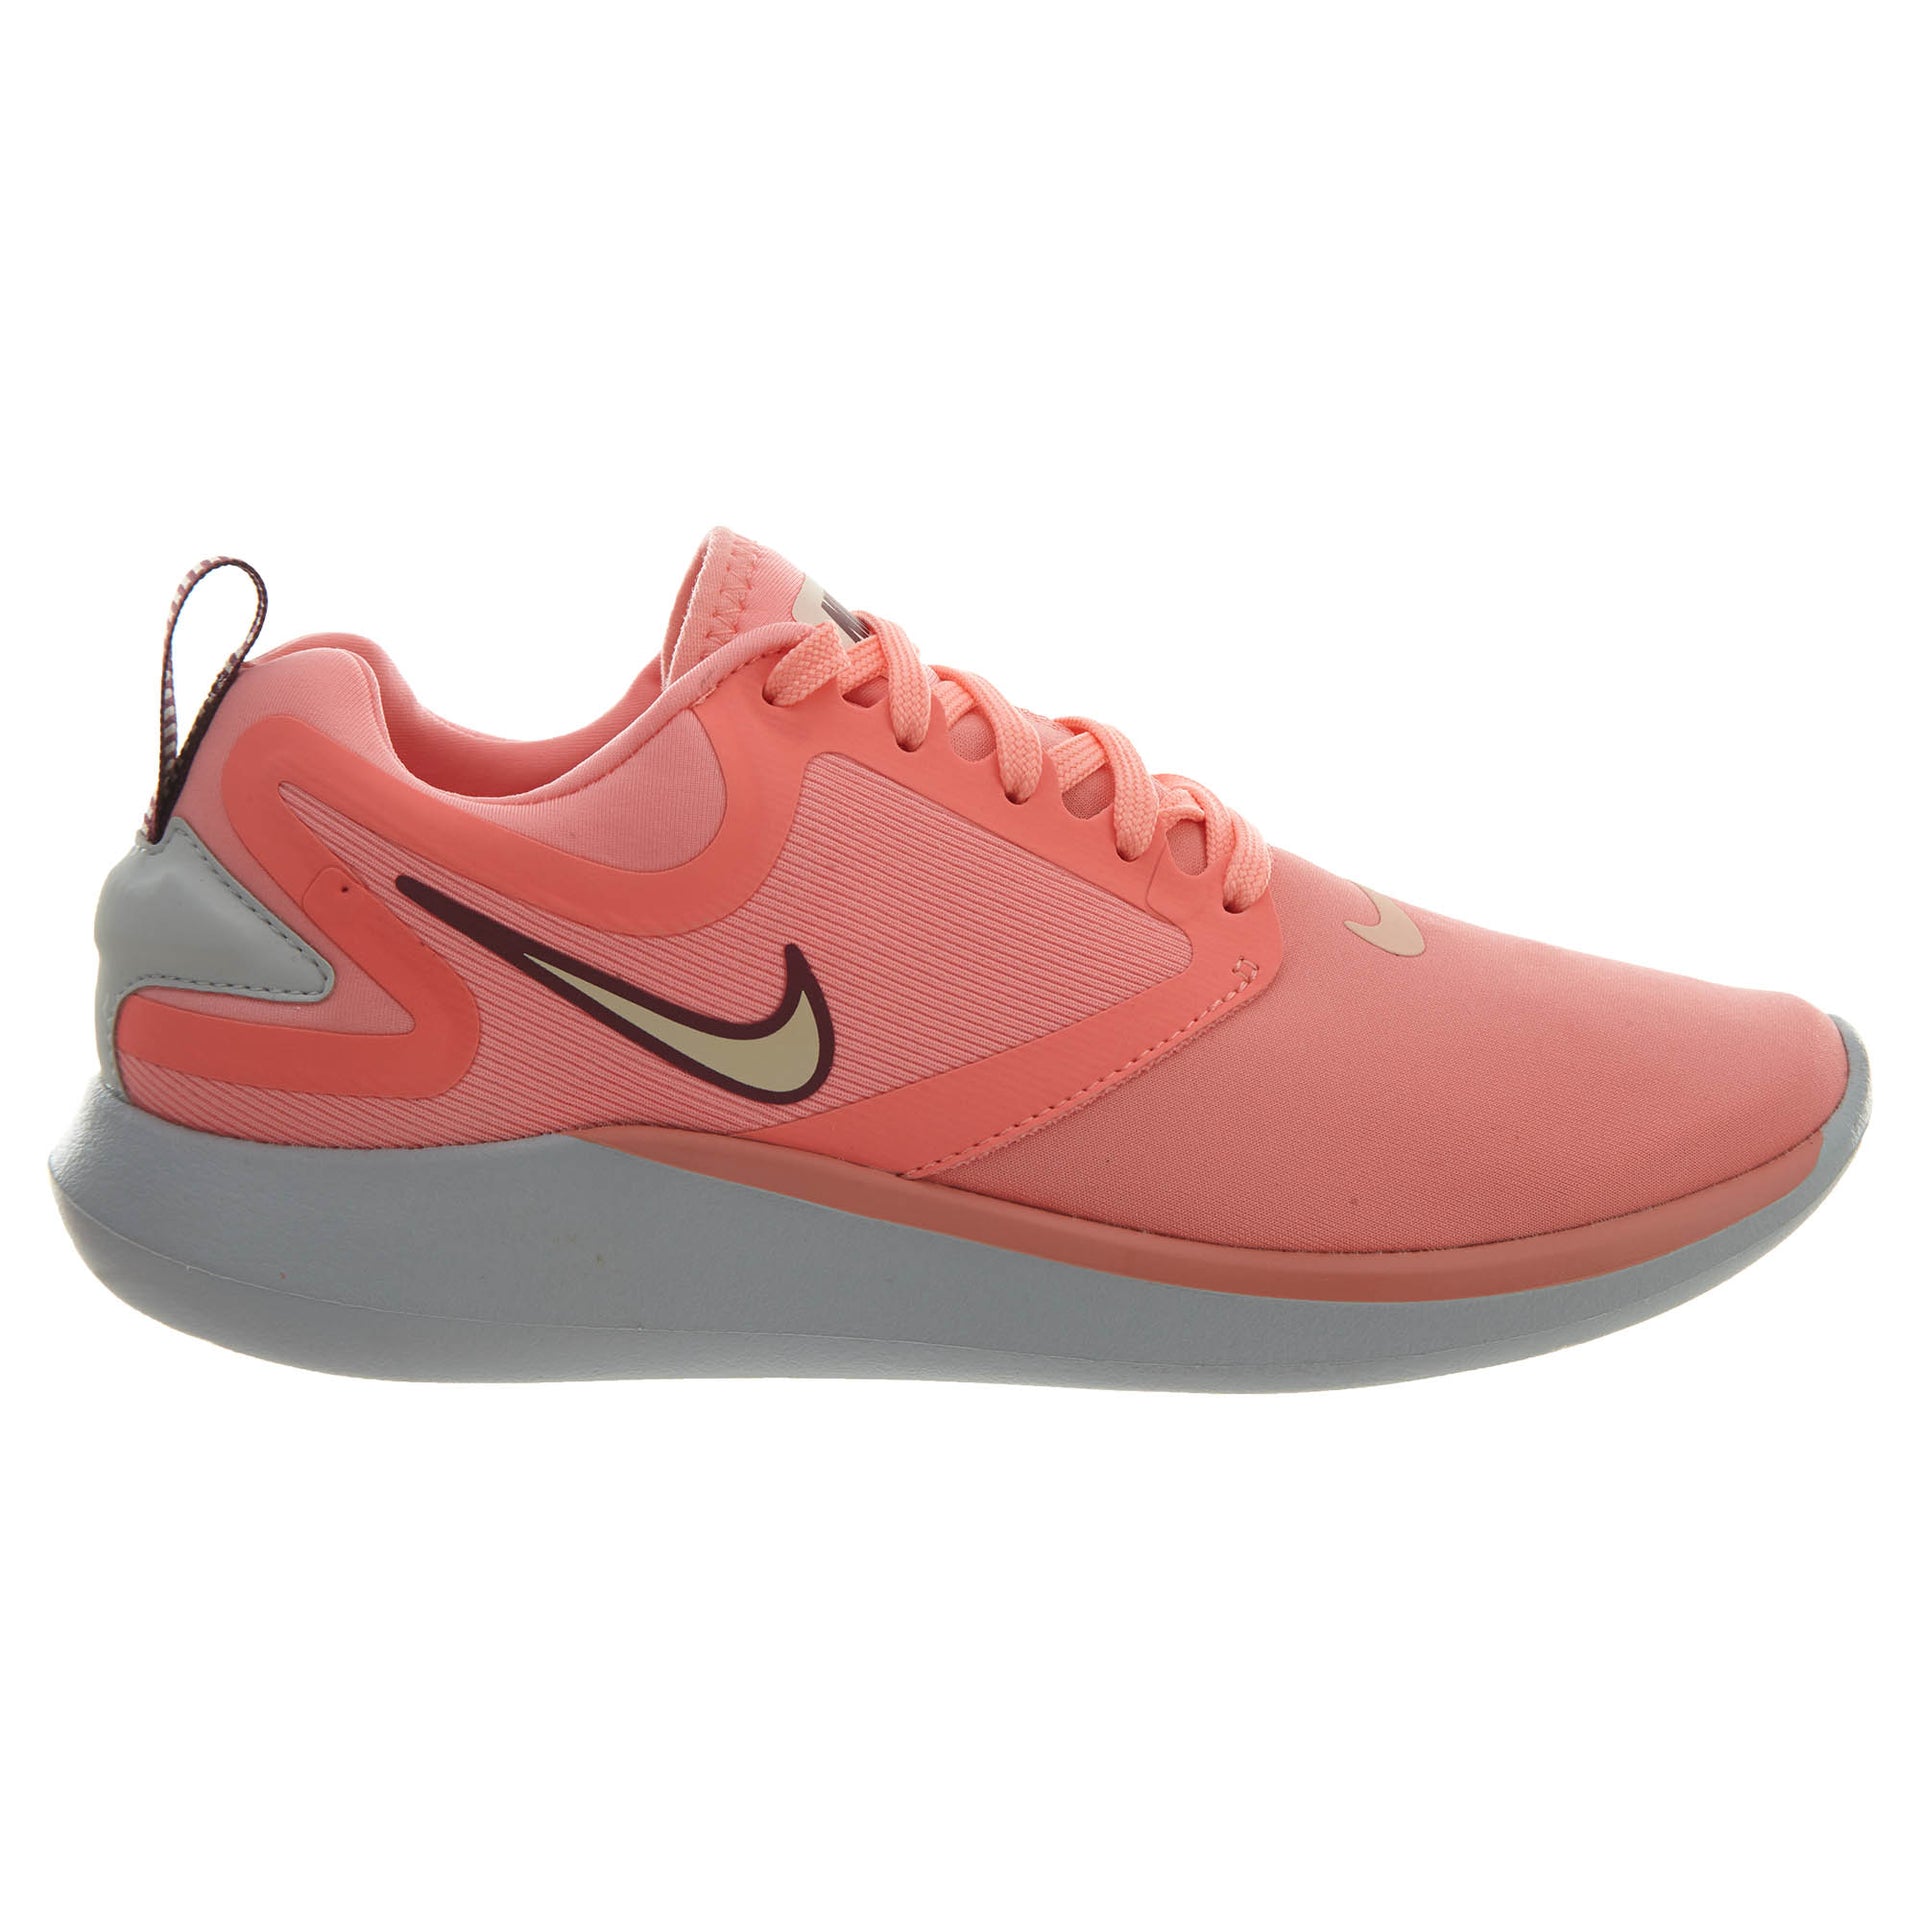 Nike Lunarsolo Lt Atomic Pink Crimson Tint (Women's)